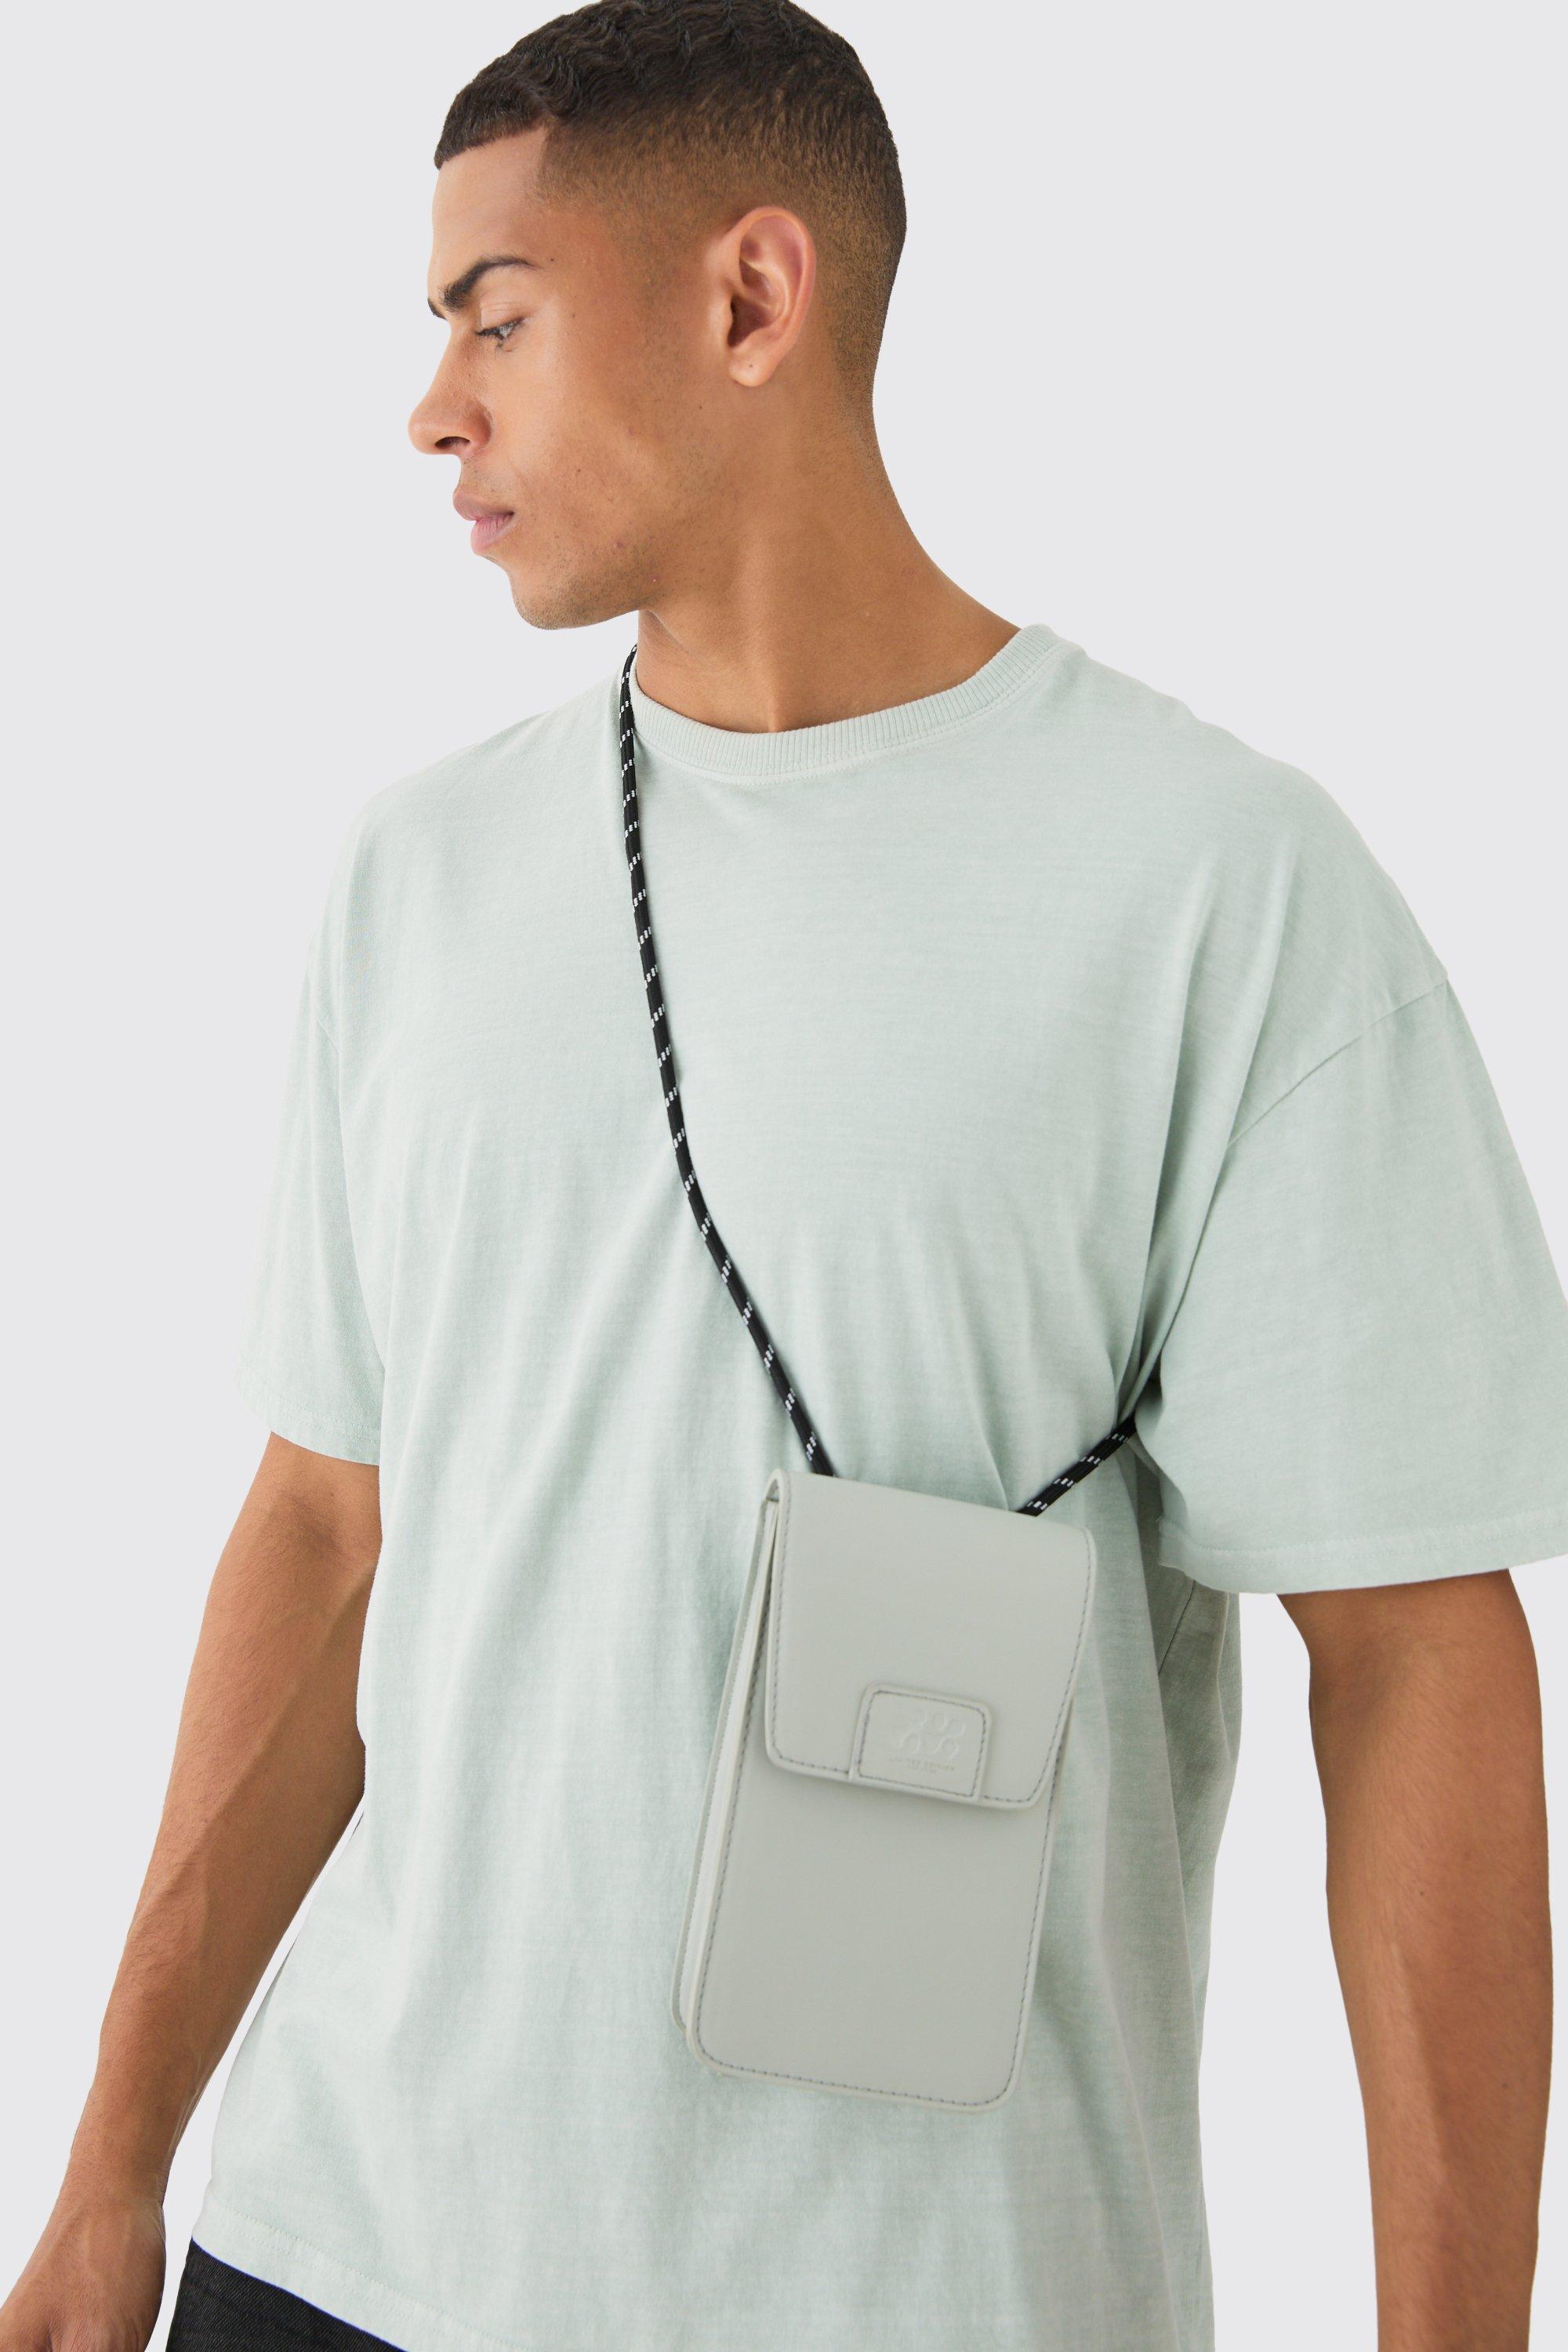 Image of Pu Man Tab Phone Bag In Light Grey, Grigio